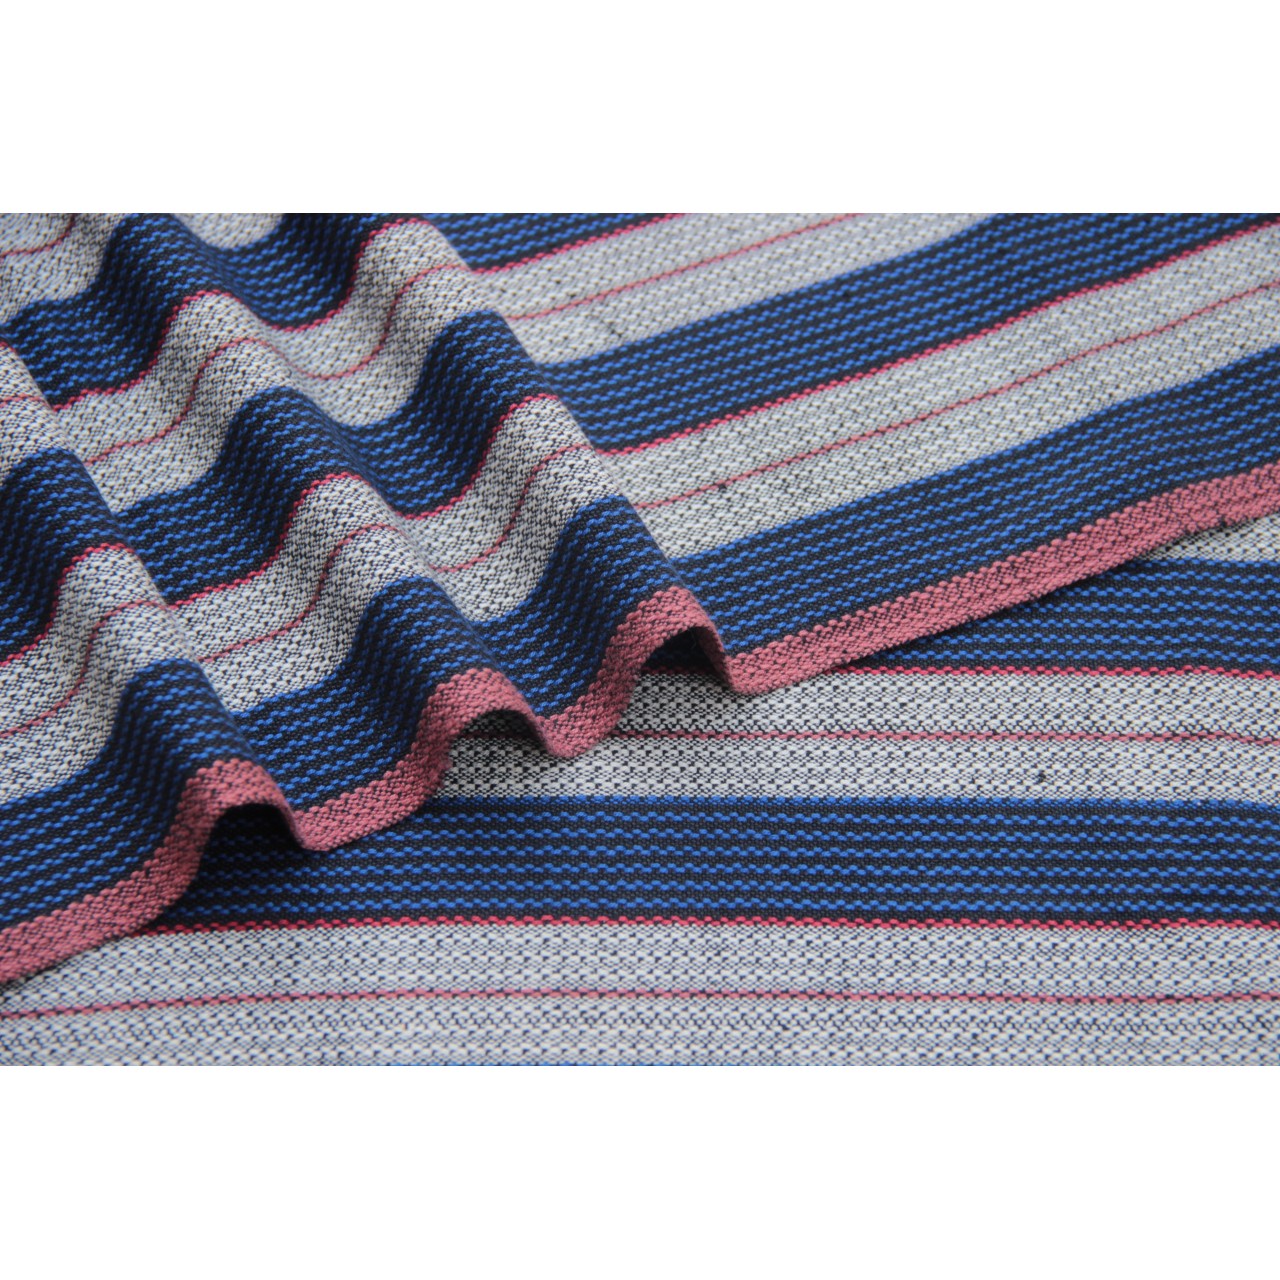 (136) Cotton Azo free dyed yardage from Kutch - Ivory, black, royal blue, vertical stripes